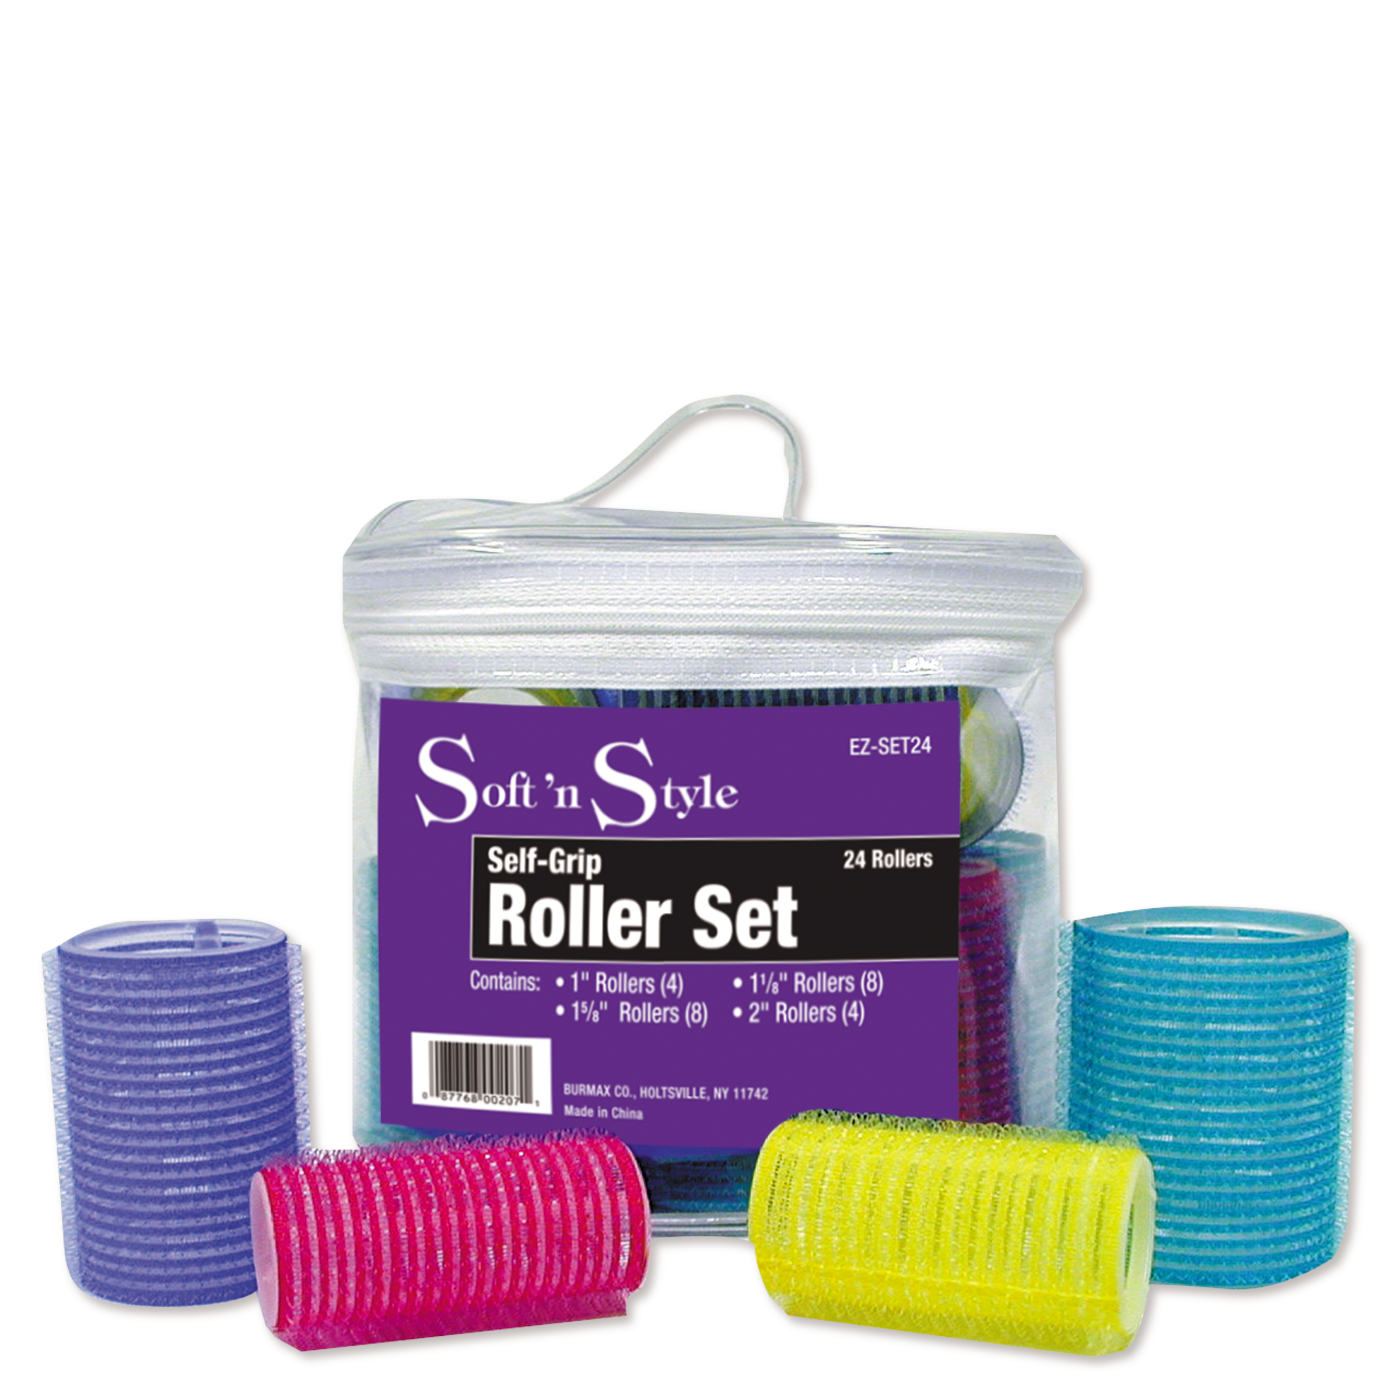 Self-Grip Roller Set